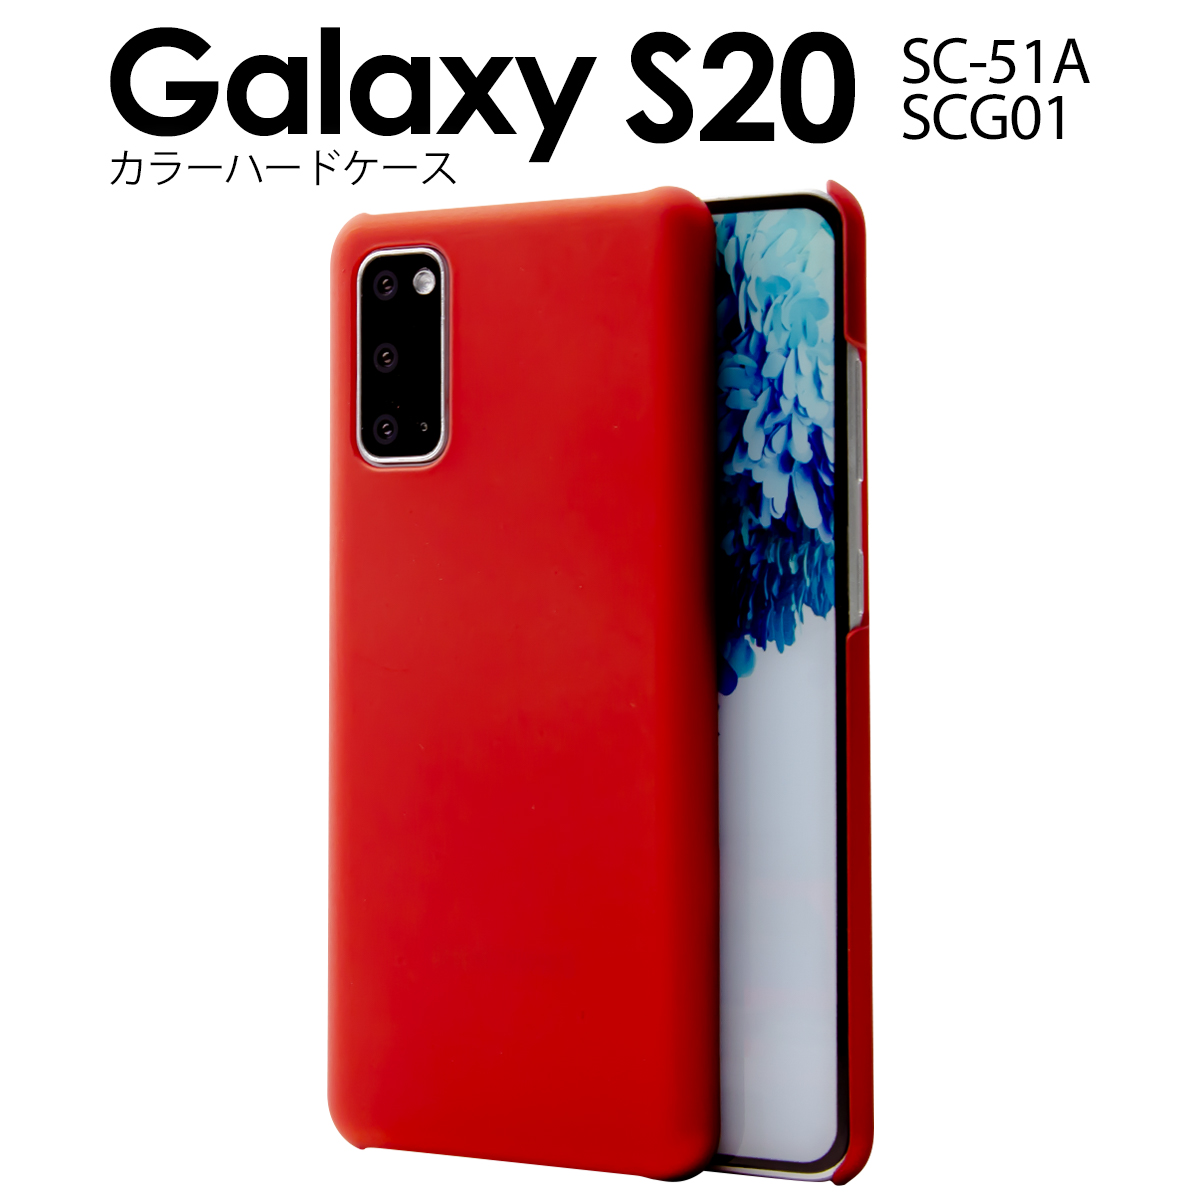 Galaxy S20 5G SC-51A SCG01 カラフルカラーハードケース|スマホケース卸問屋